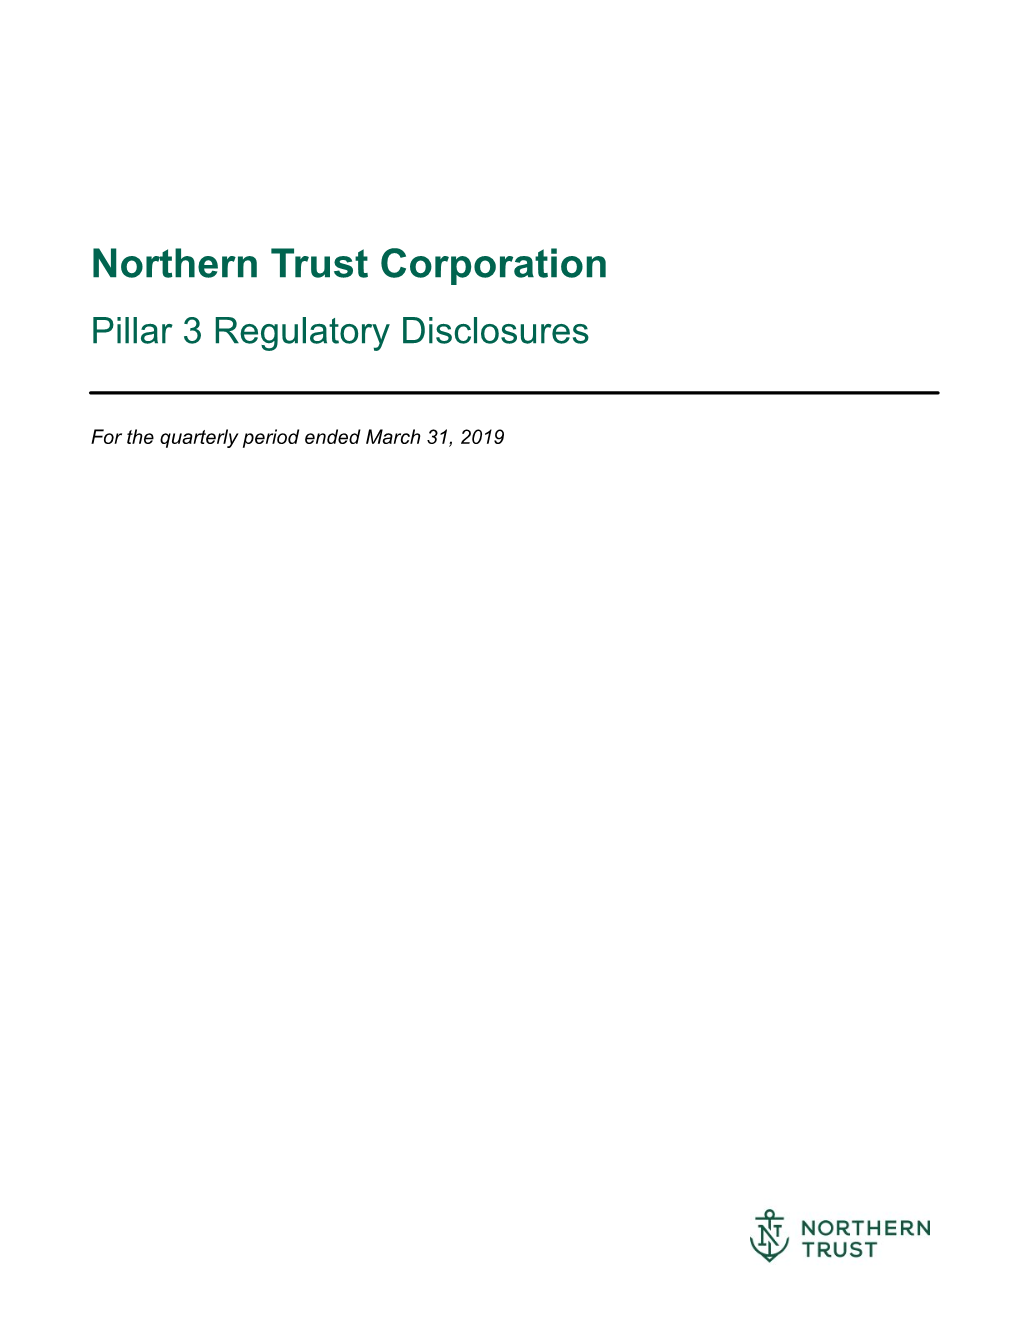 Northern Trust Corporation Pillar 3 Regulatory Disclosures